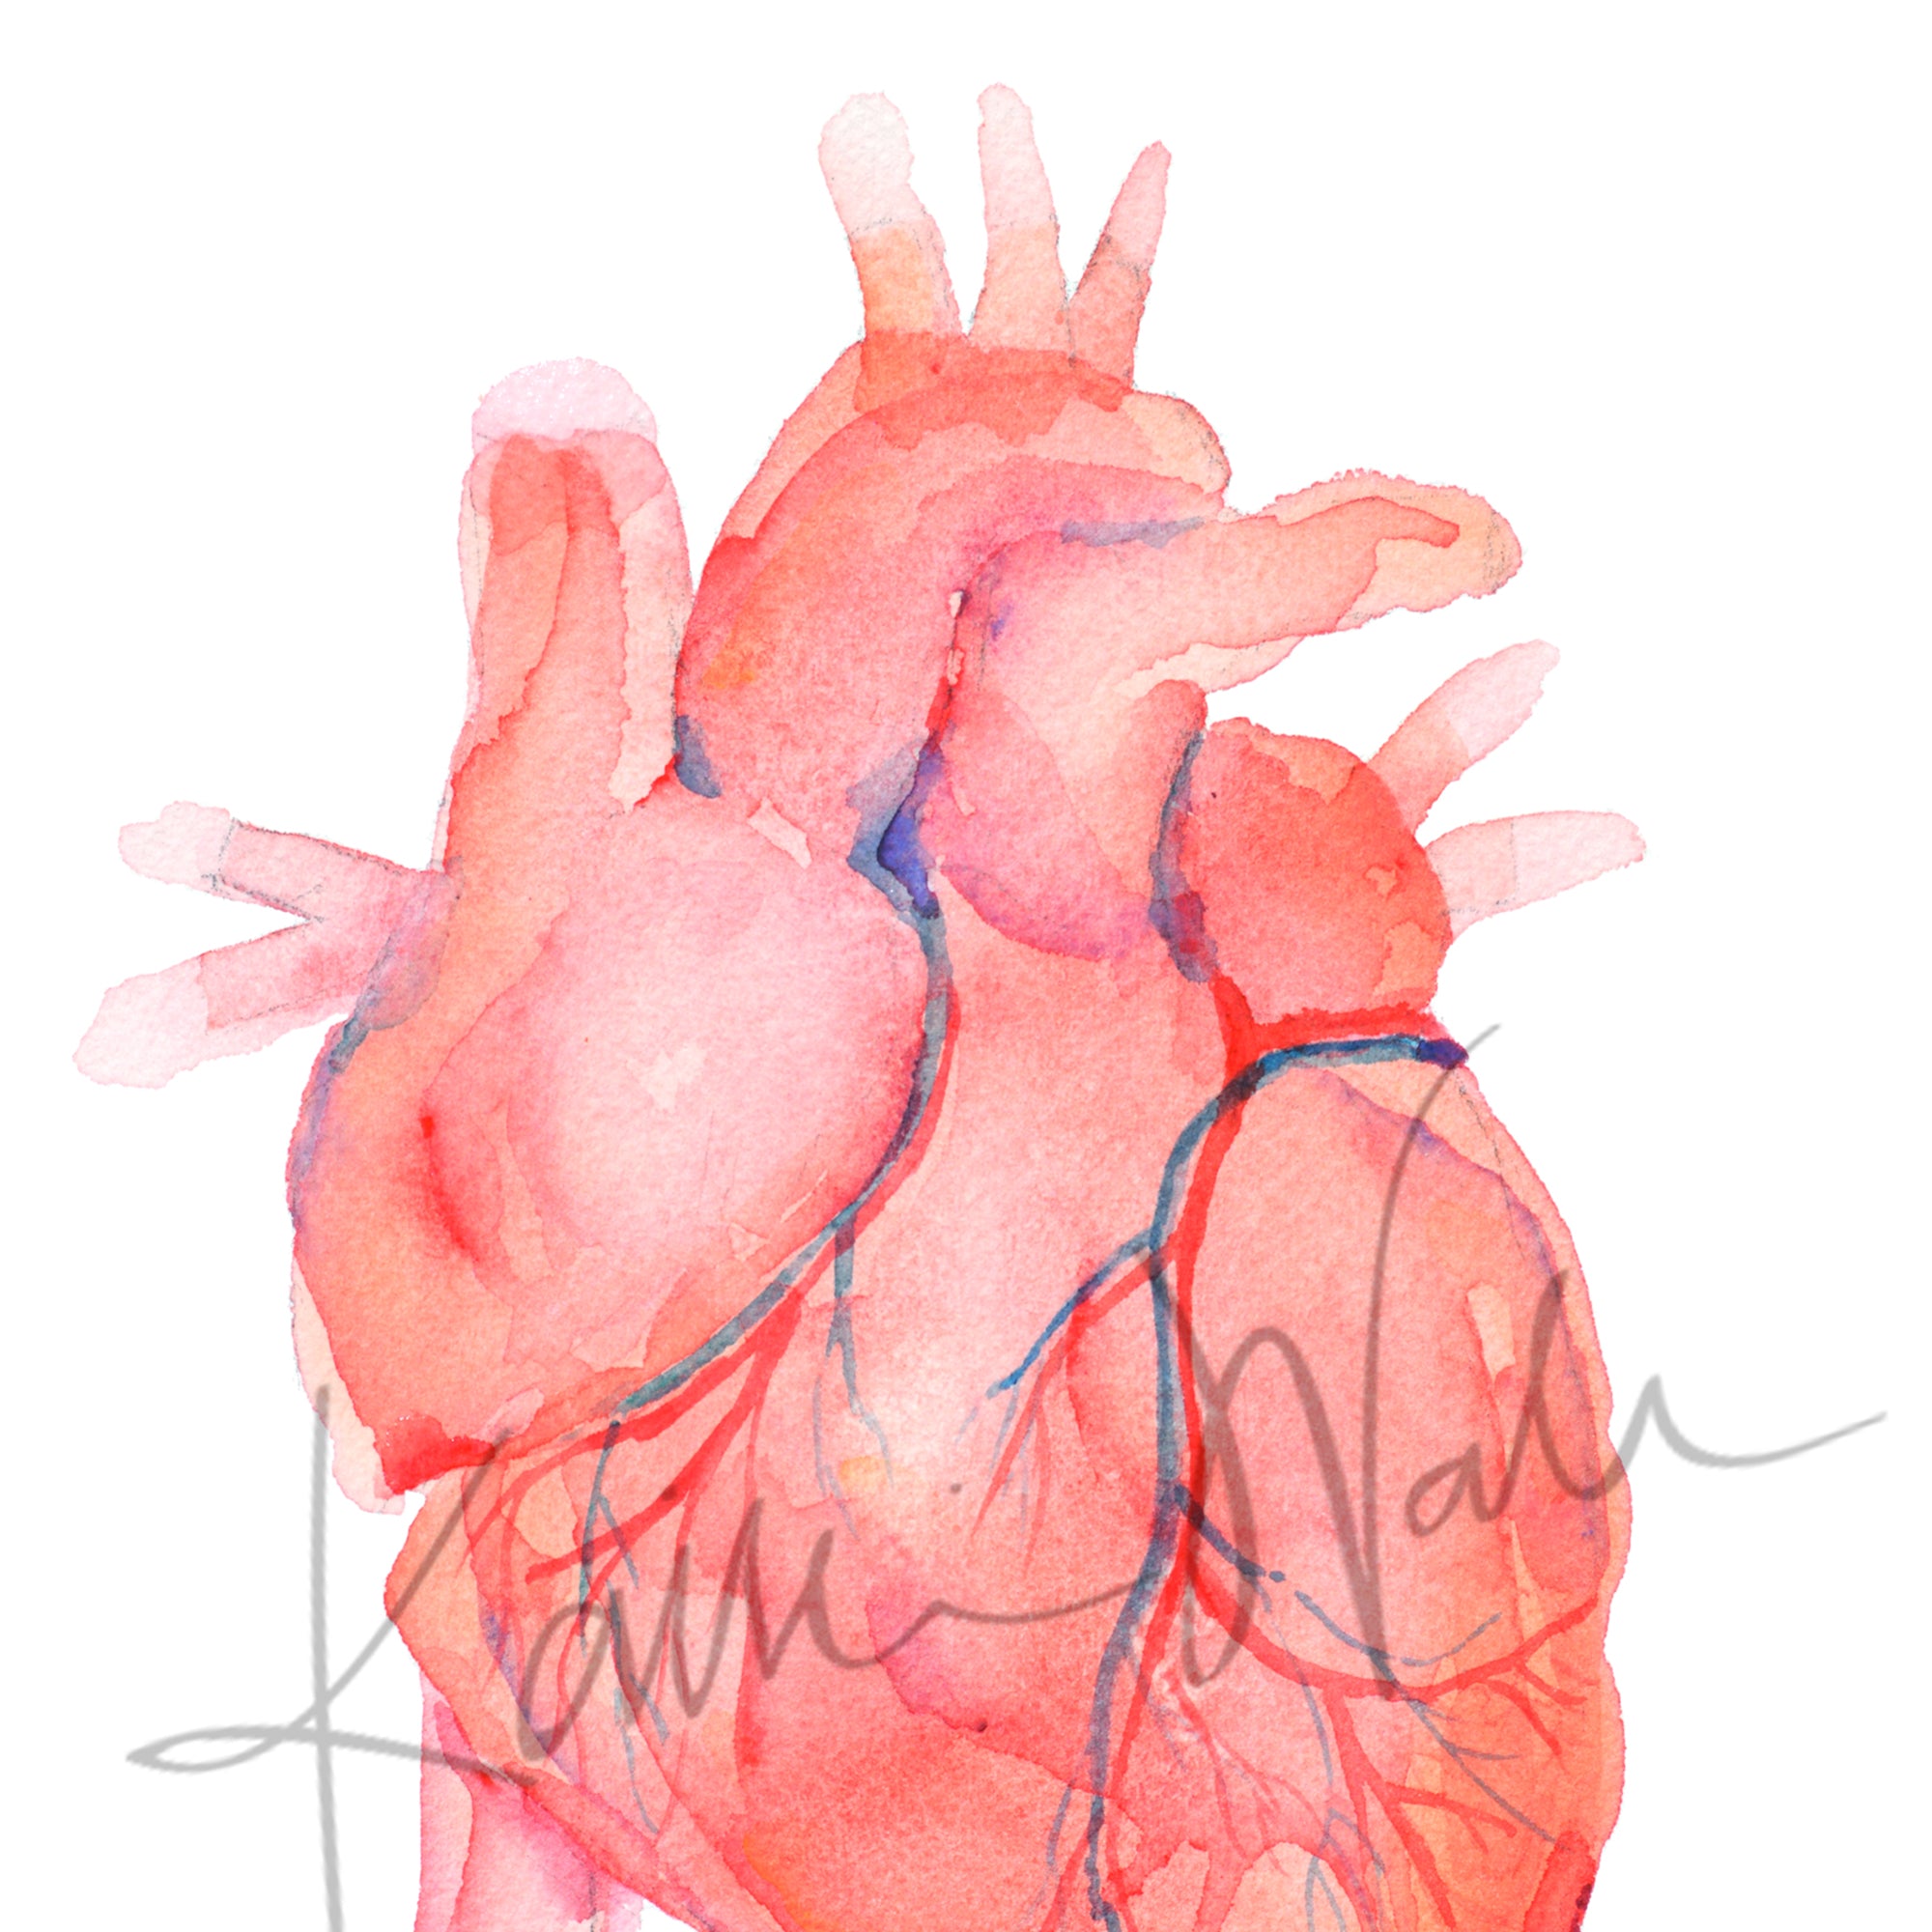 Anatomical Heart Watercolor Print